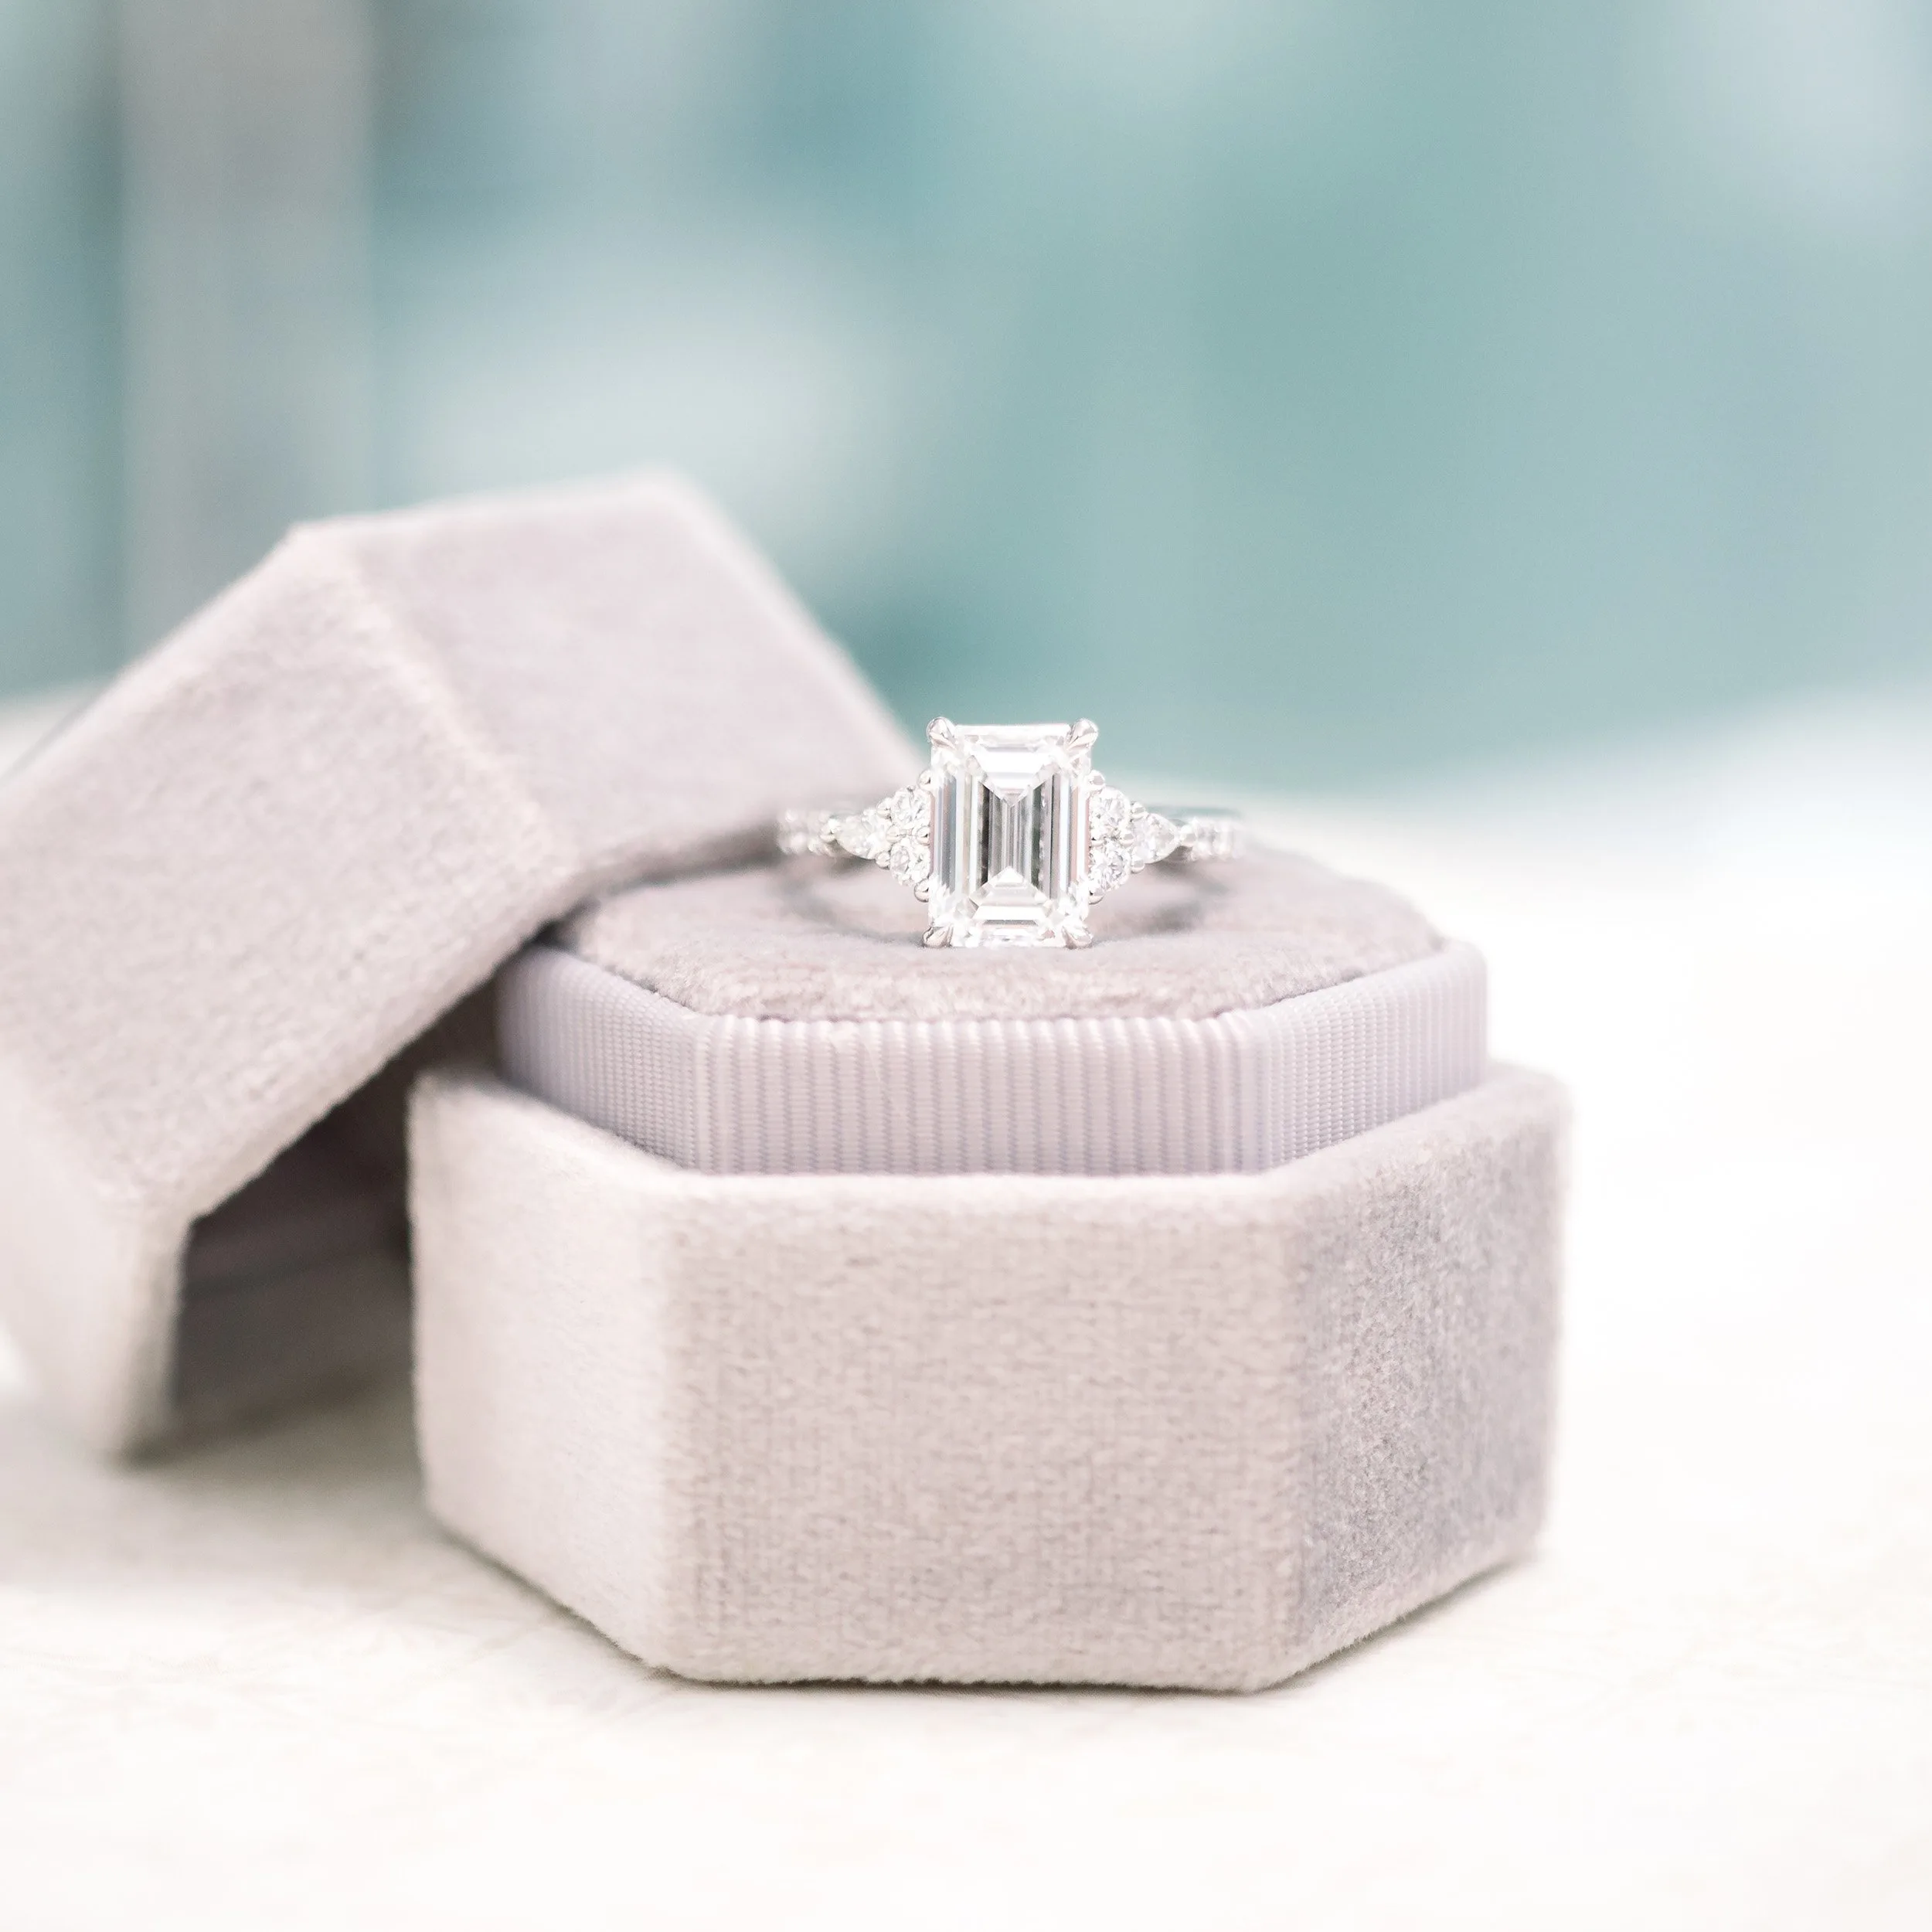 platinum 3ct emerald cut lab diamond engagement ring with cluster side stones and diamond band ada diamonds design ad 178 macro